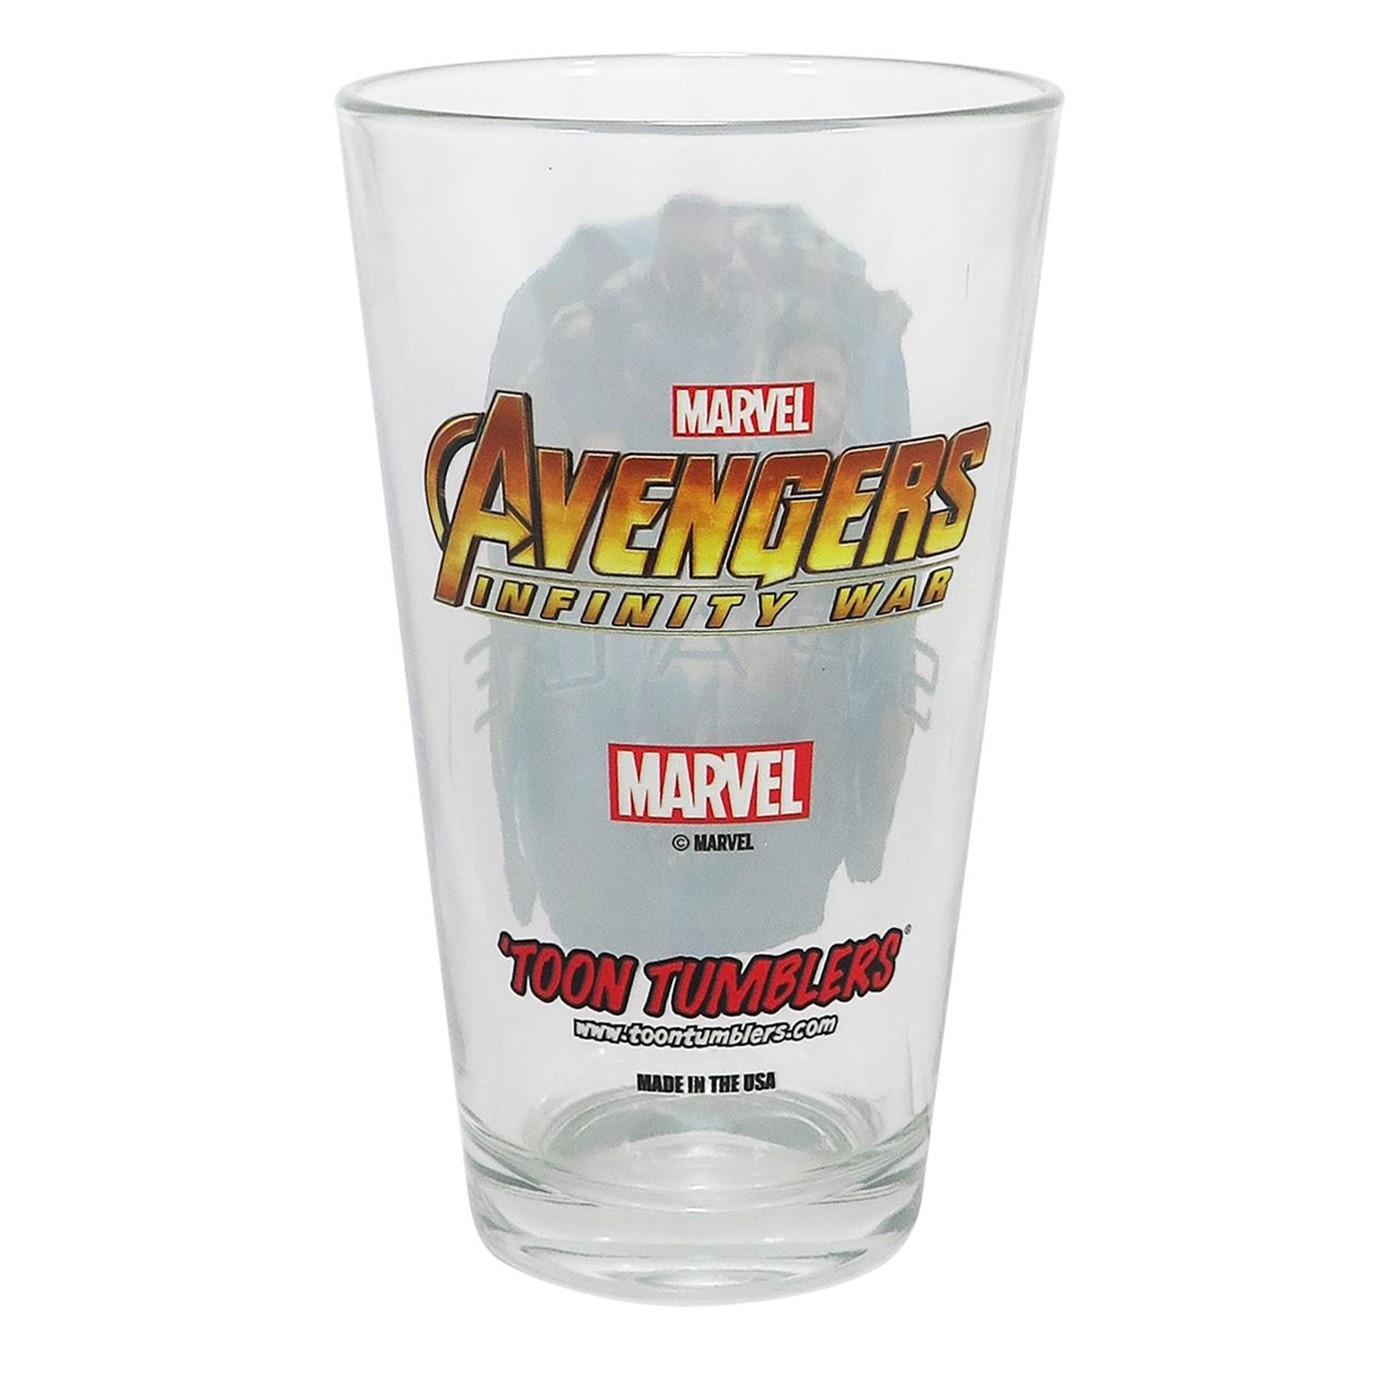 Avengers Infinity War Space Pint Glass